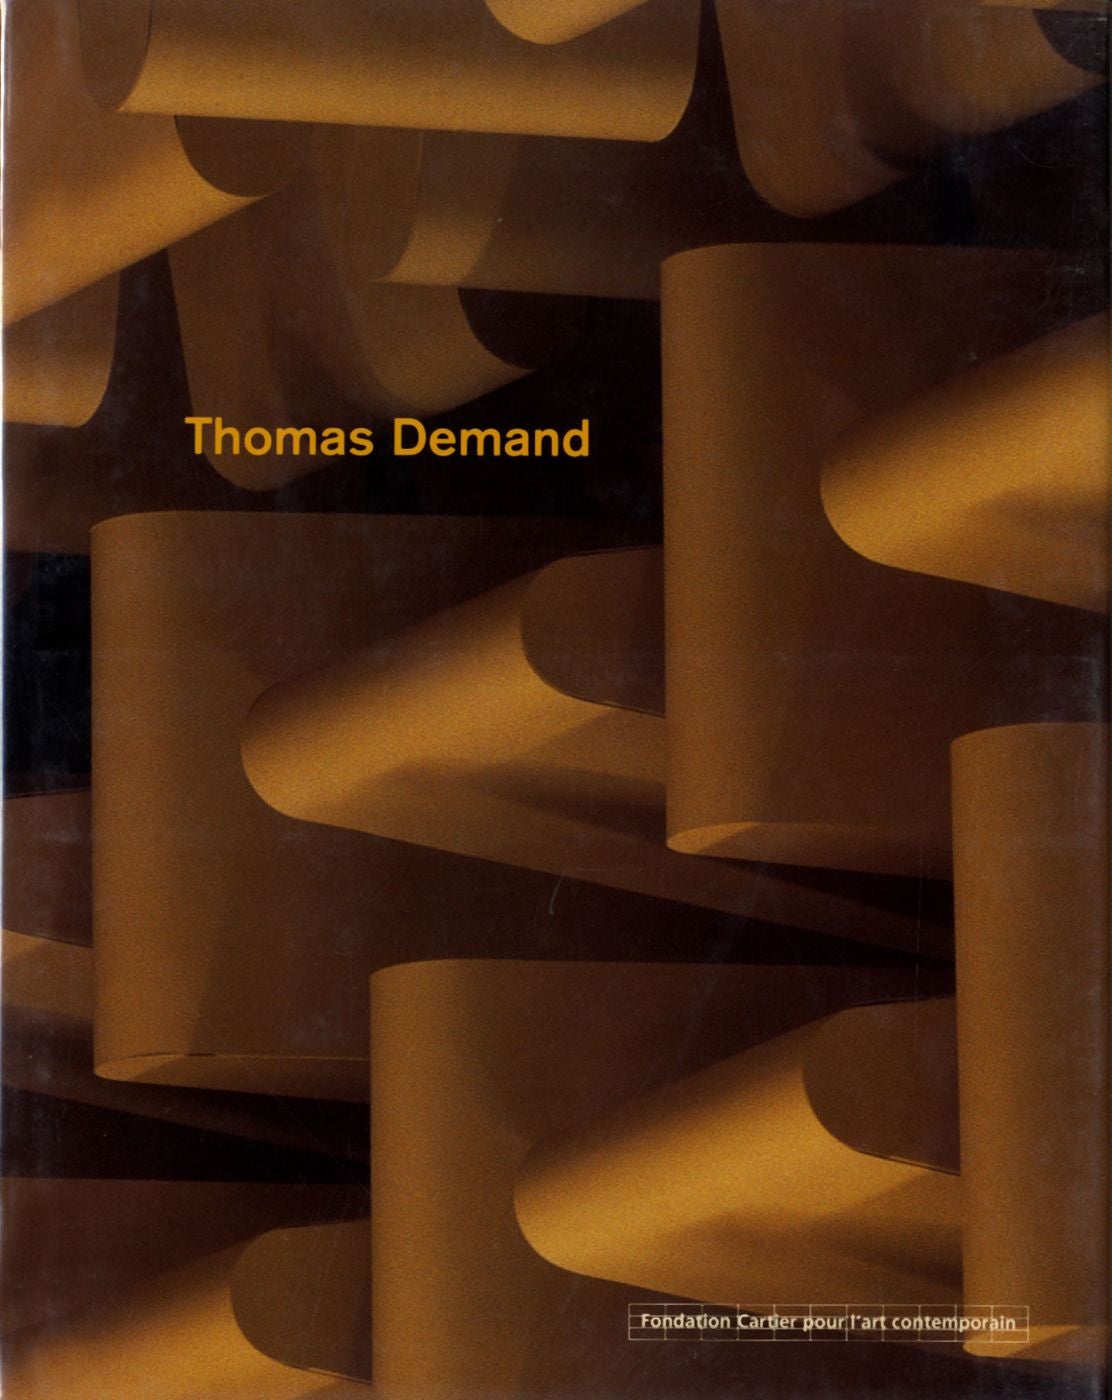 Grosse Illusionen: Thomas Demand, Andreas Gursky, Ed Ruscha German